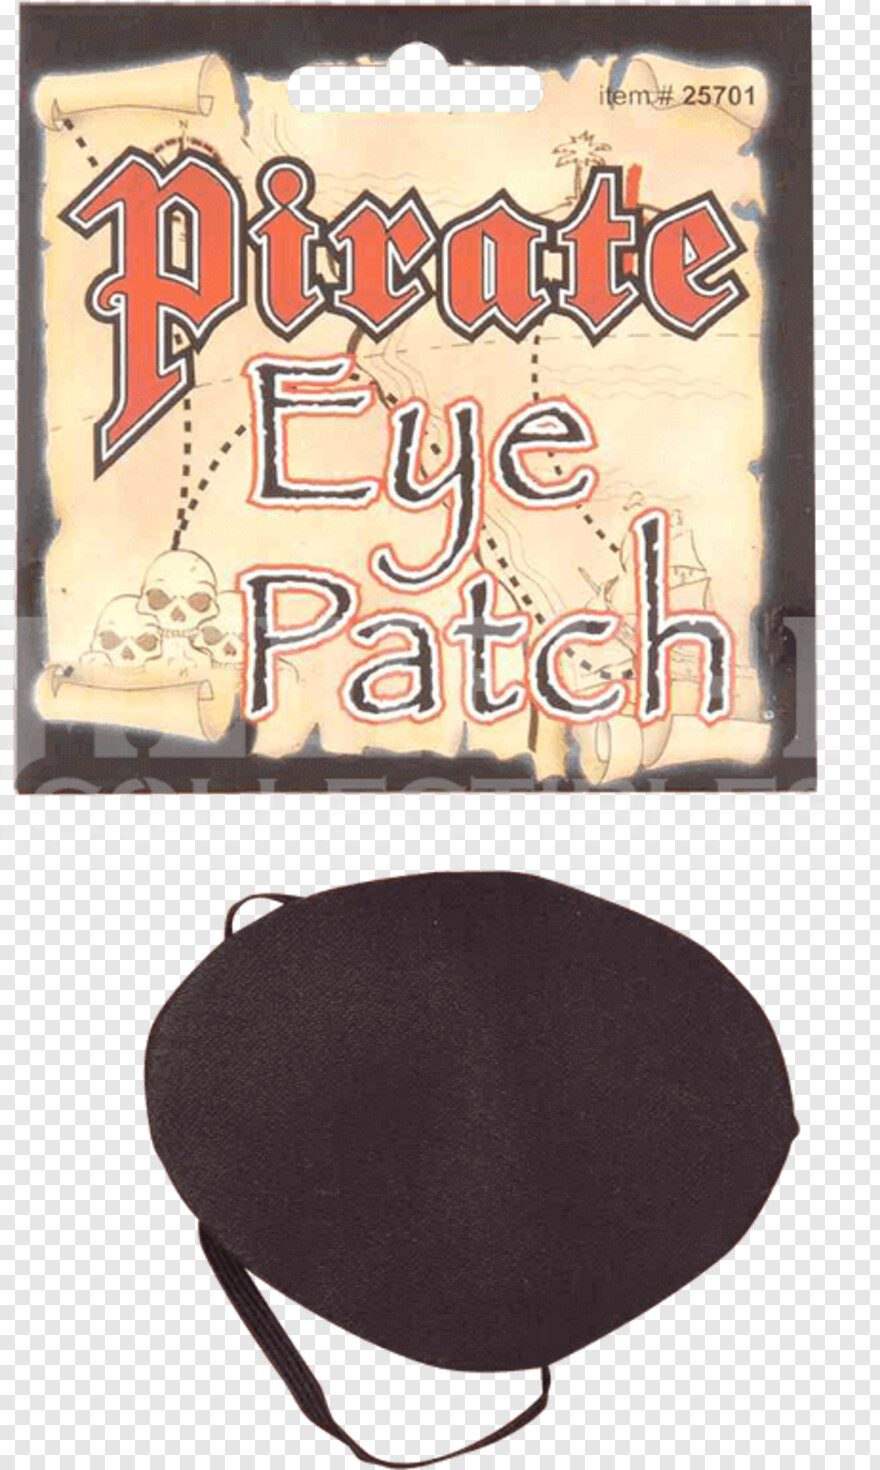 pirate-eye-patch # 353540